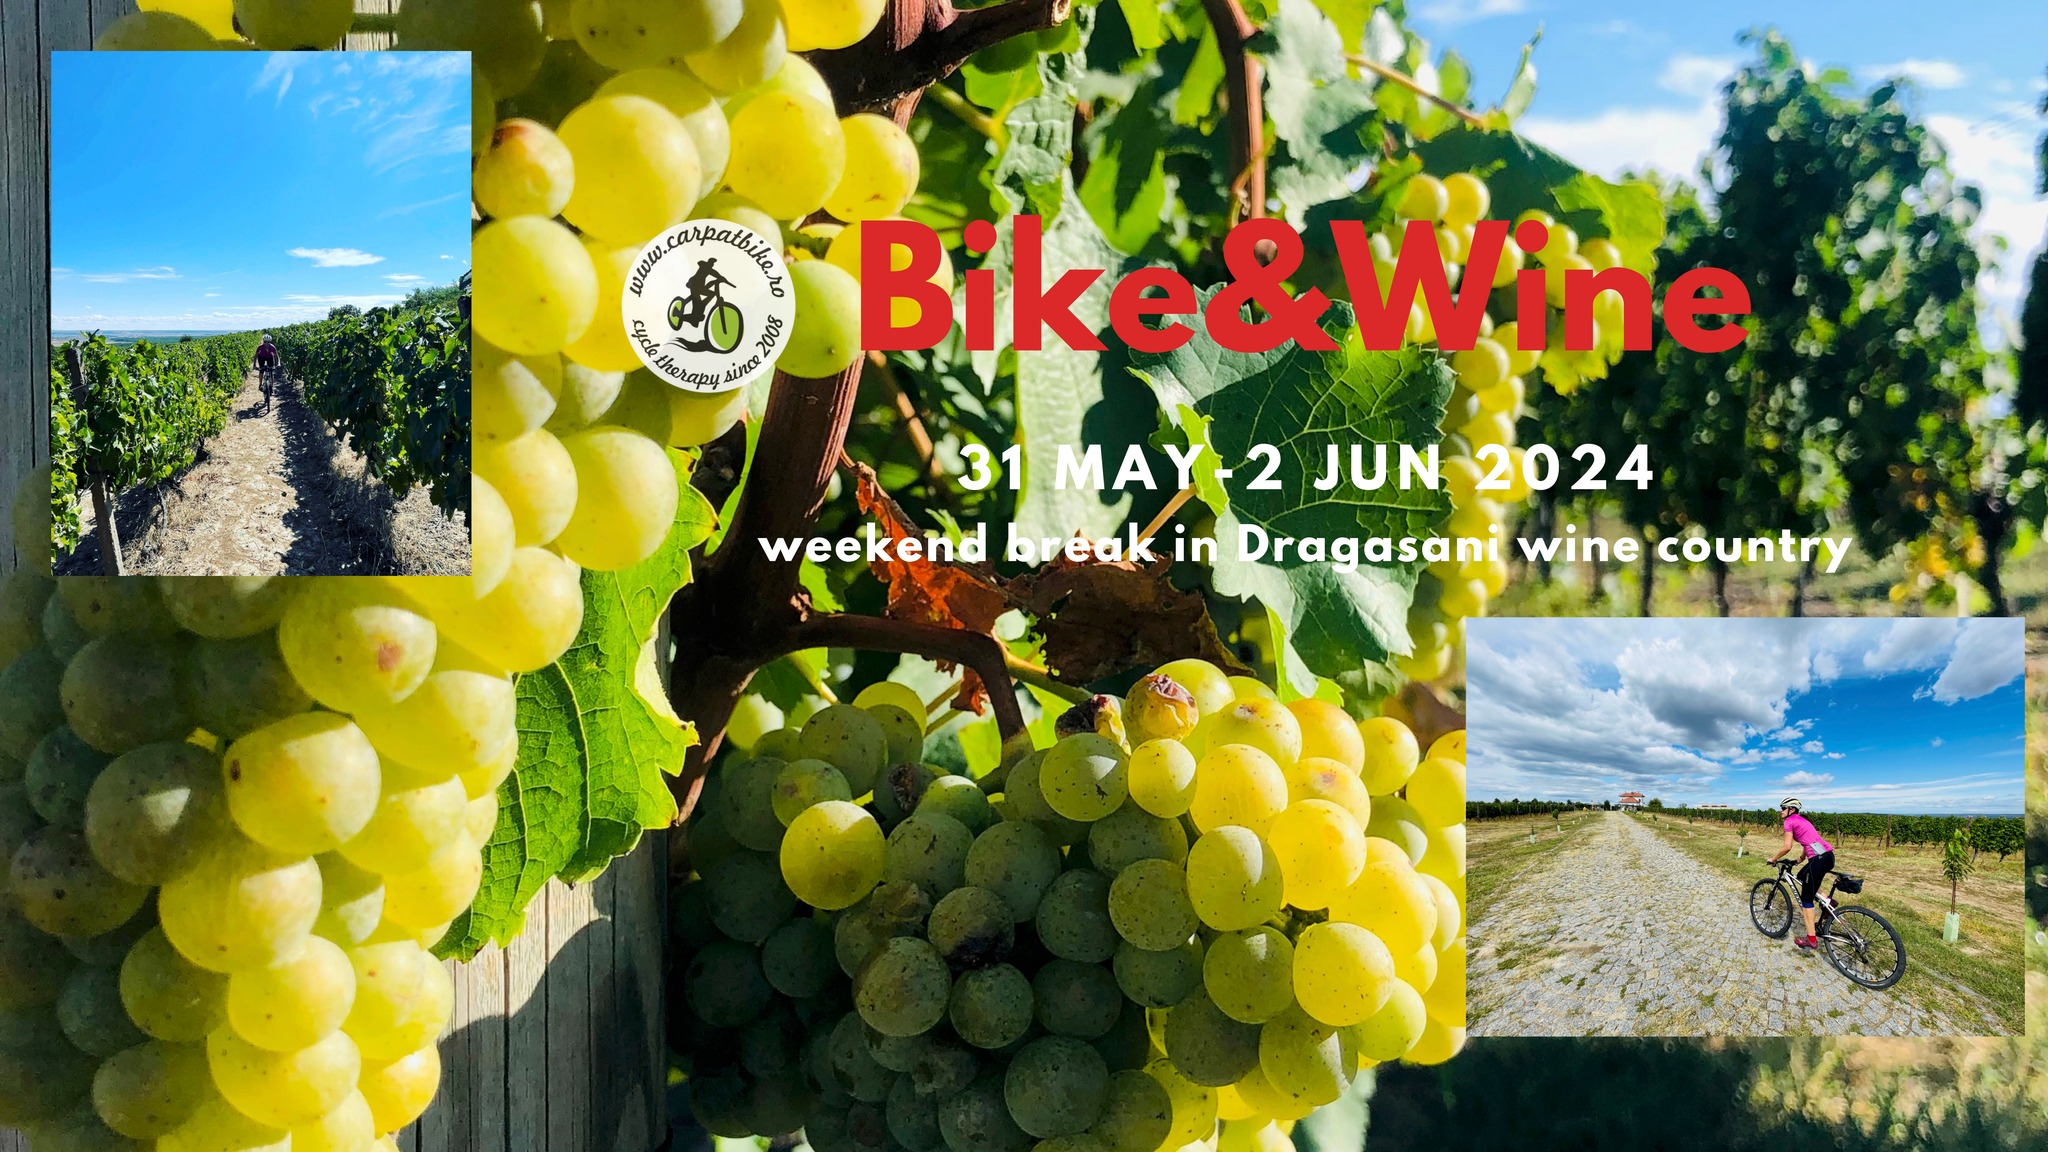 Bike & Wine weekend in Dragasani wine country (Dragasani)